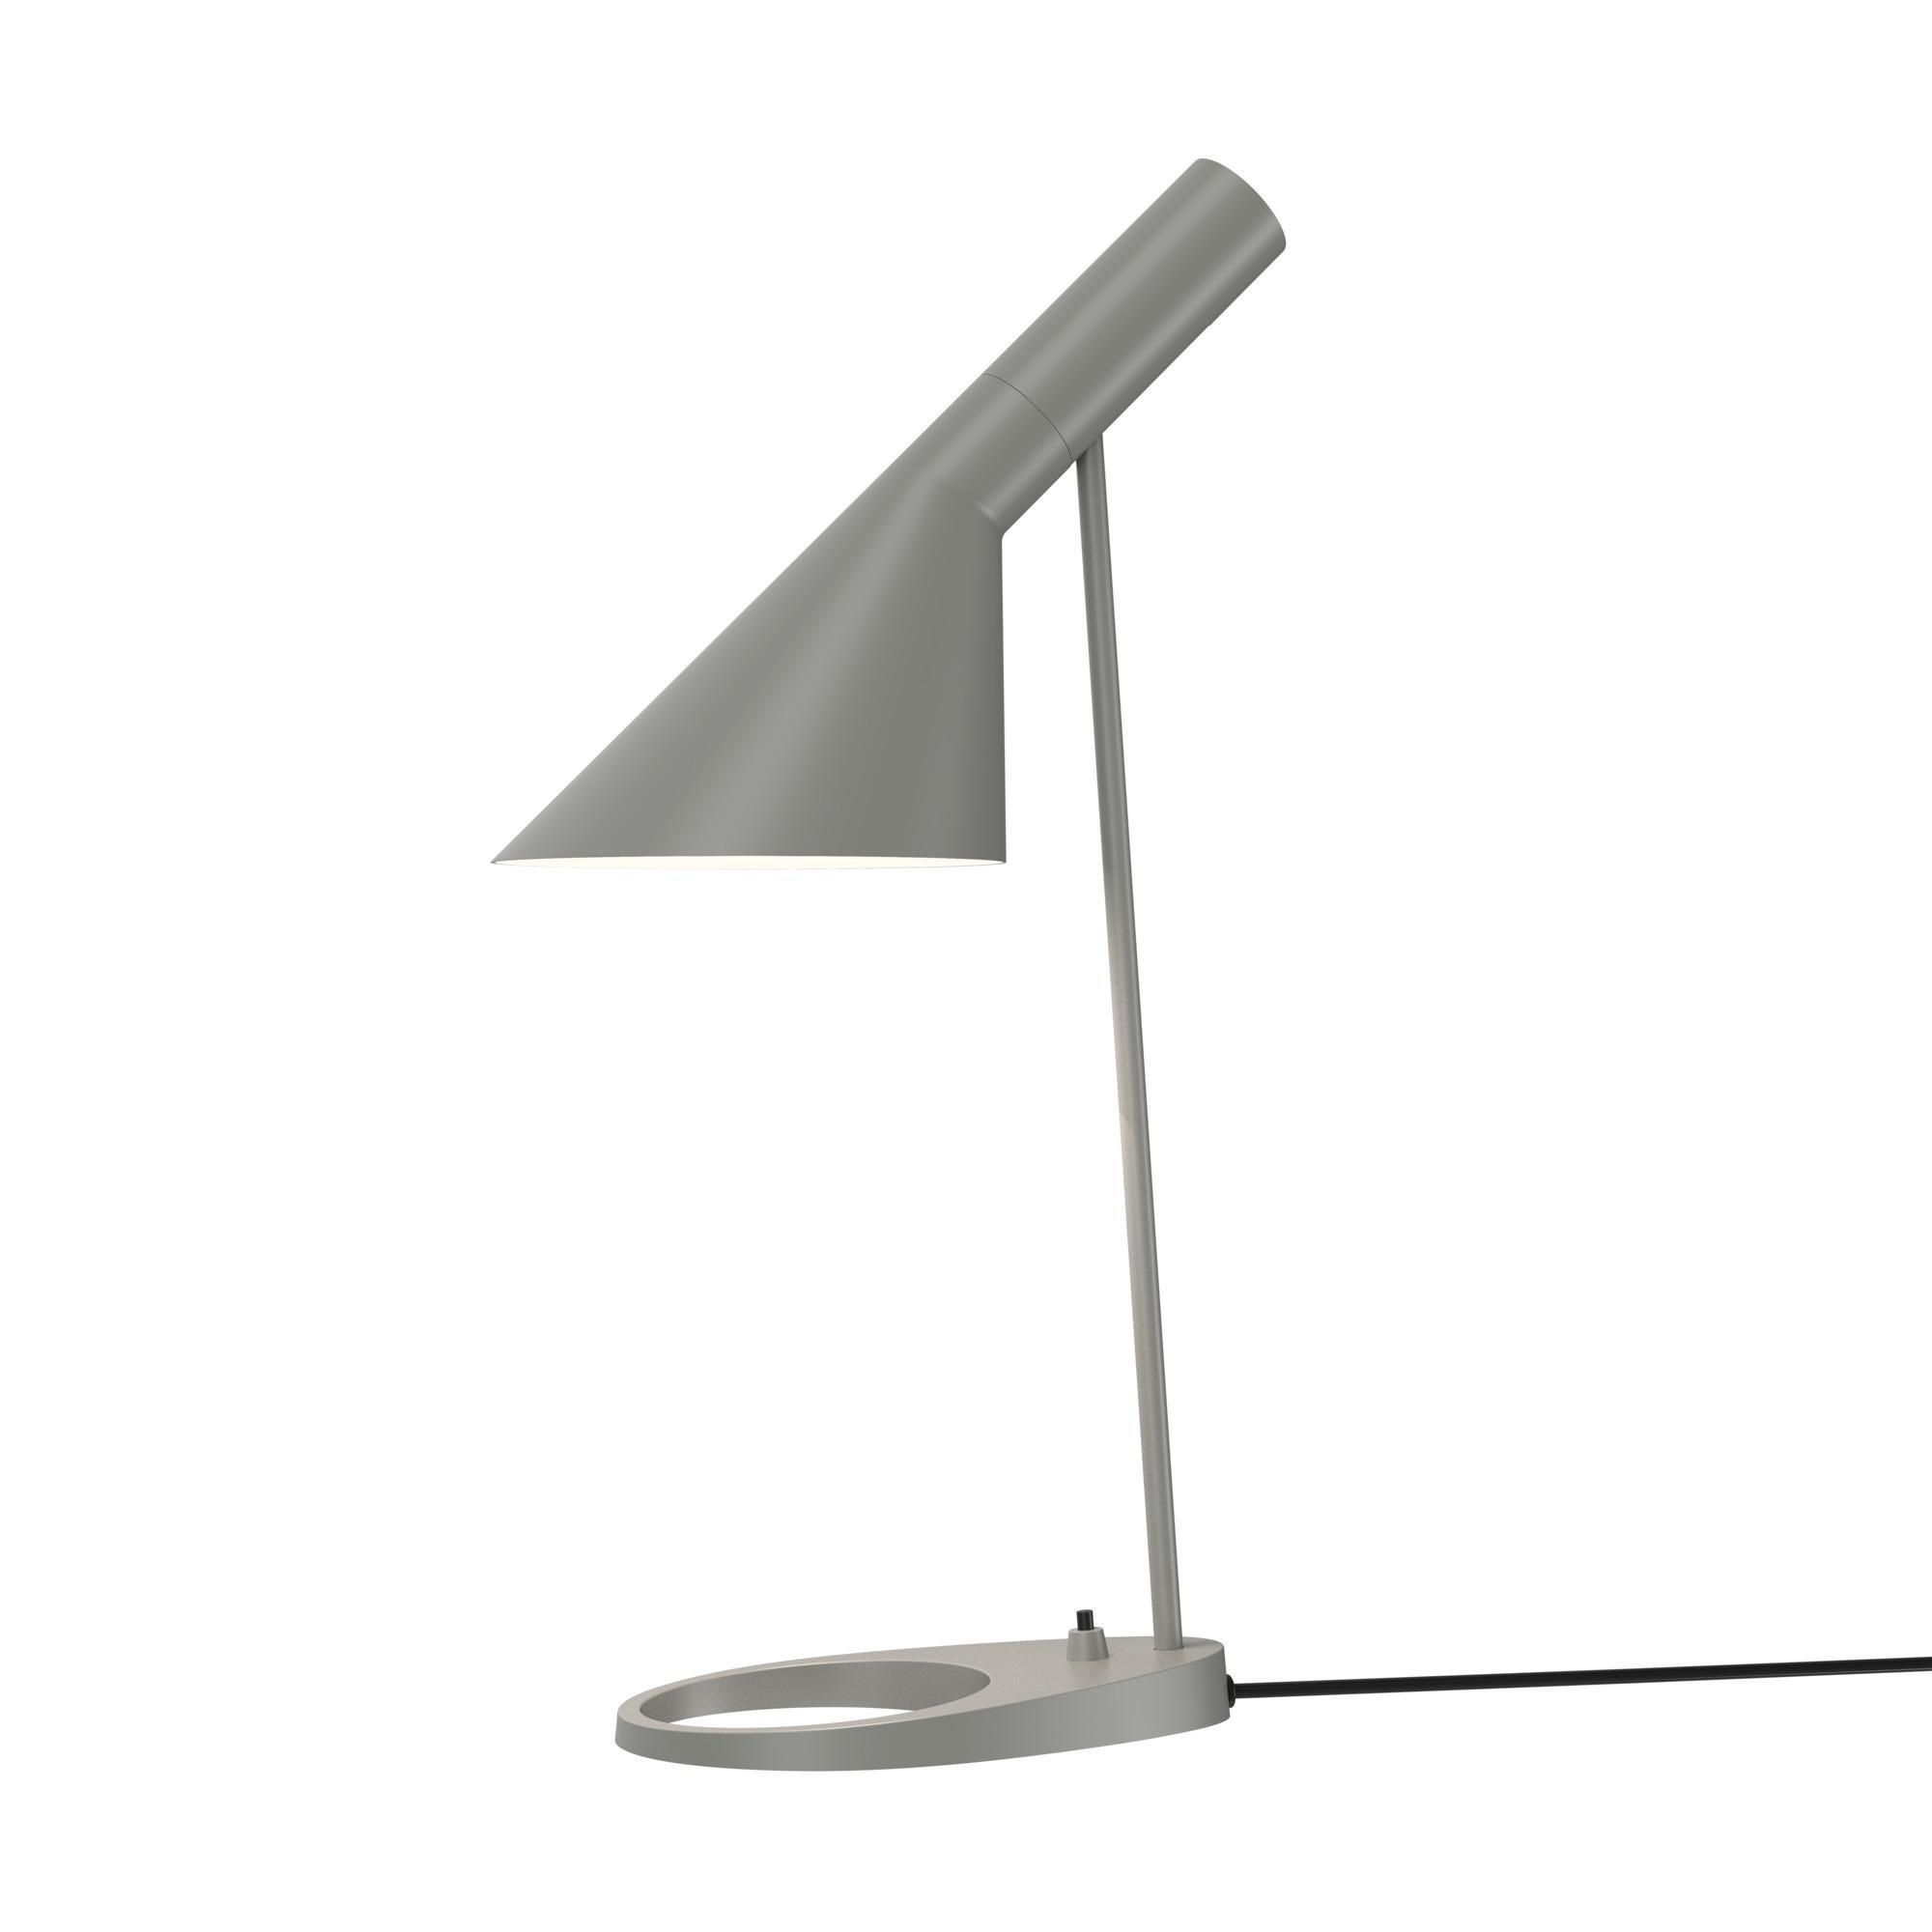 Arne Jacobsen AJ Table Lamp in Stainless Steel for Louis Poulsen For Sale 6